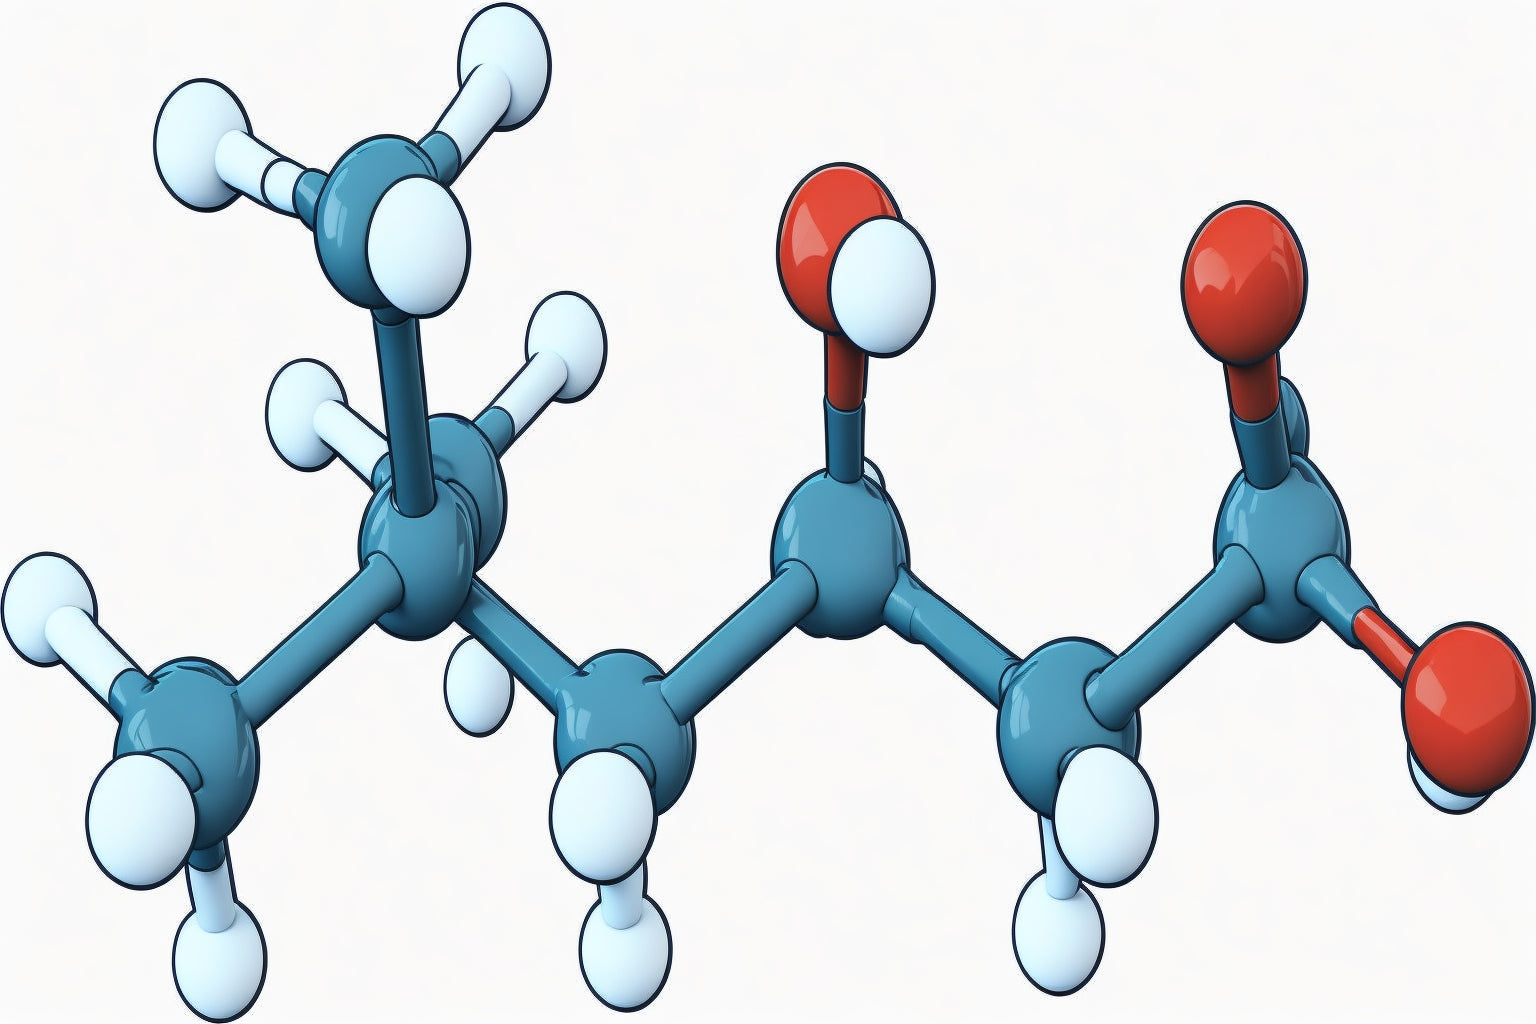 3D Molecular structure of L-Carnitine